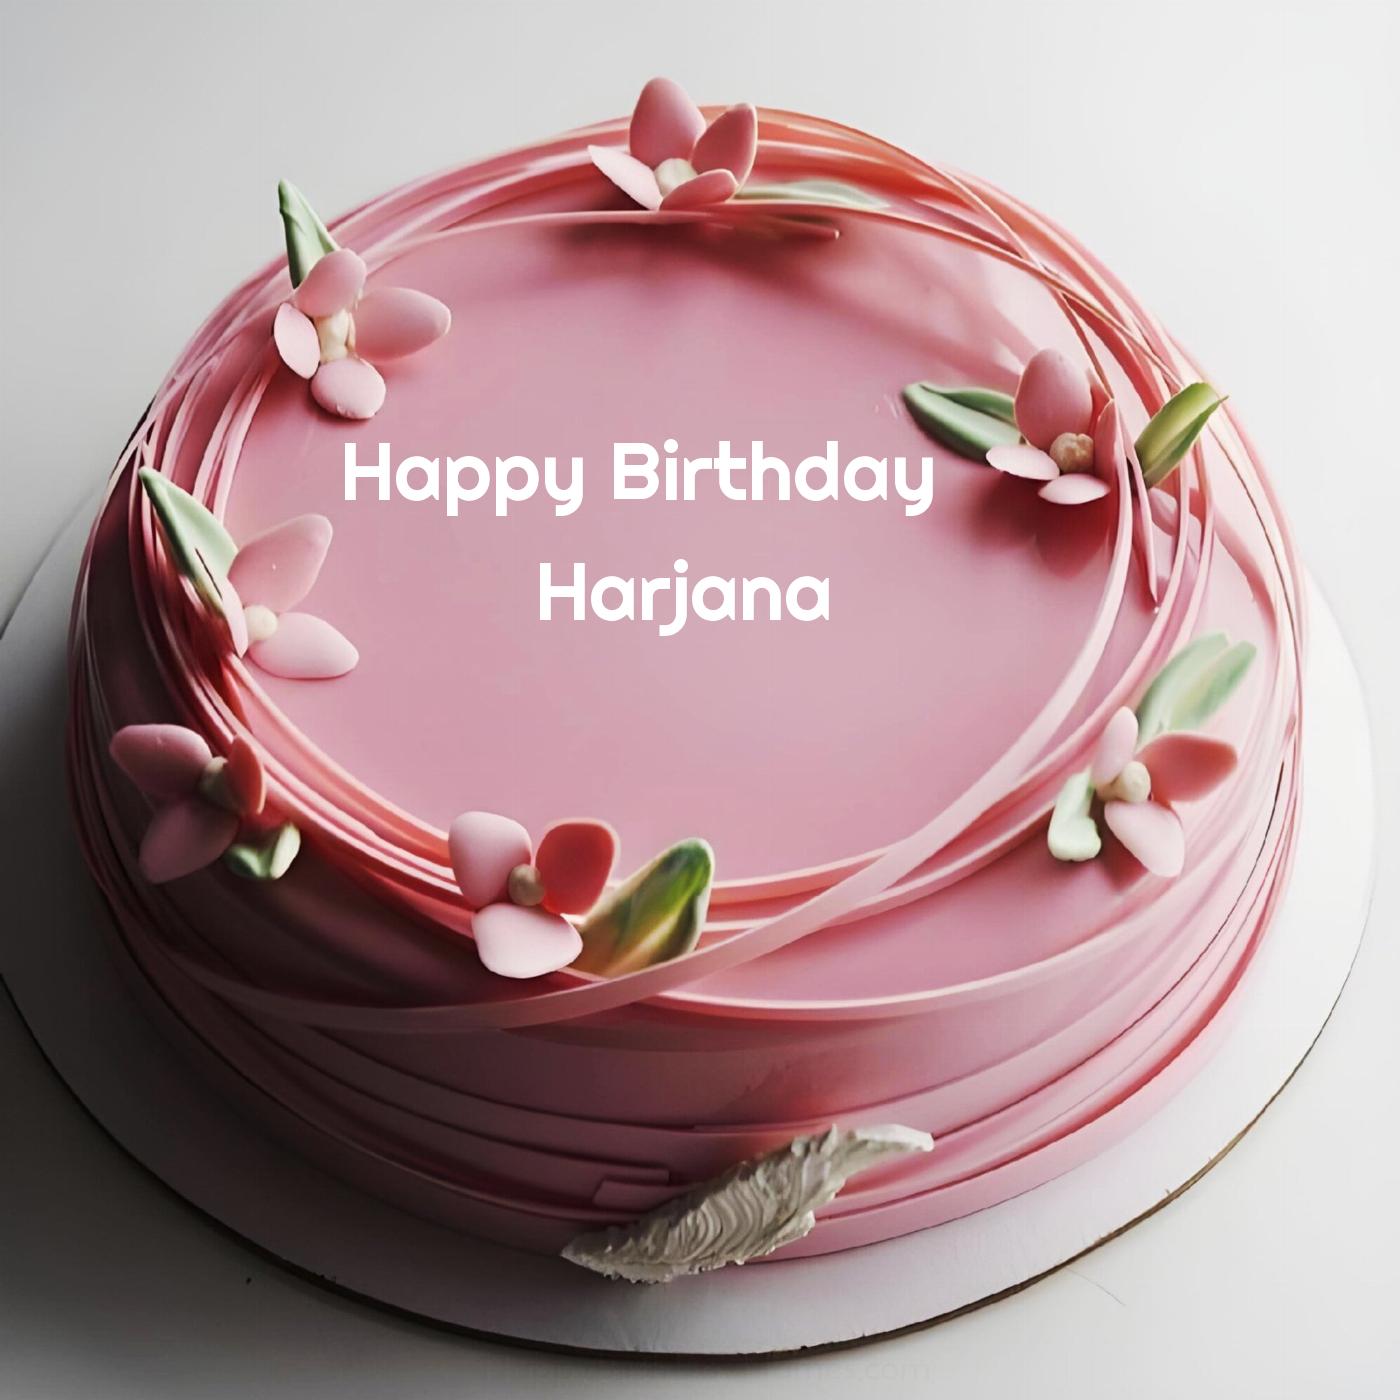 Happy Birthday Harjana Pink Flowers Cake